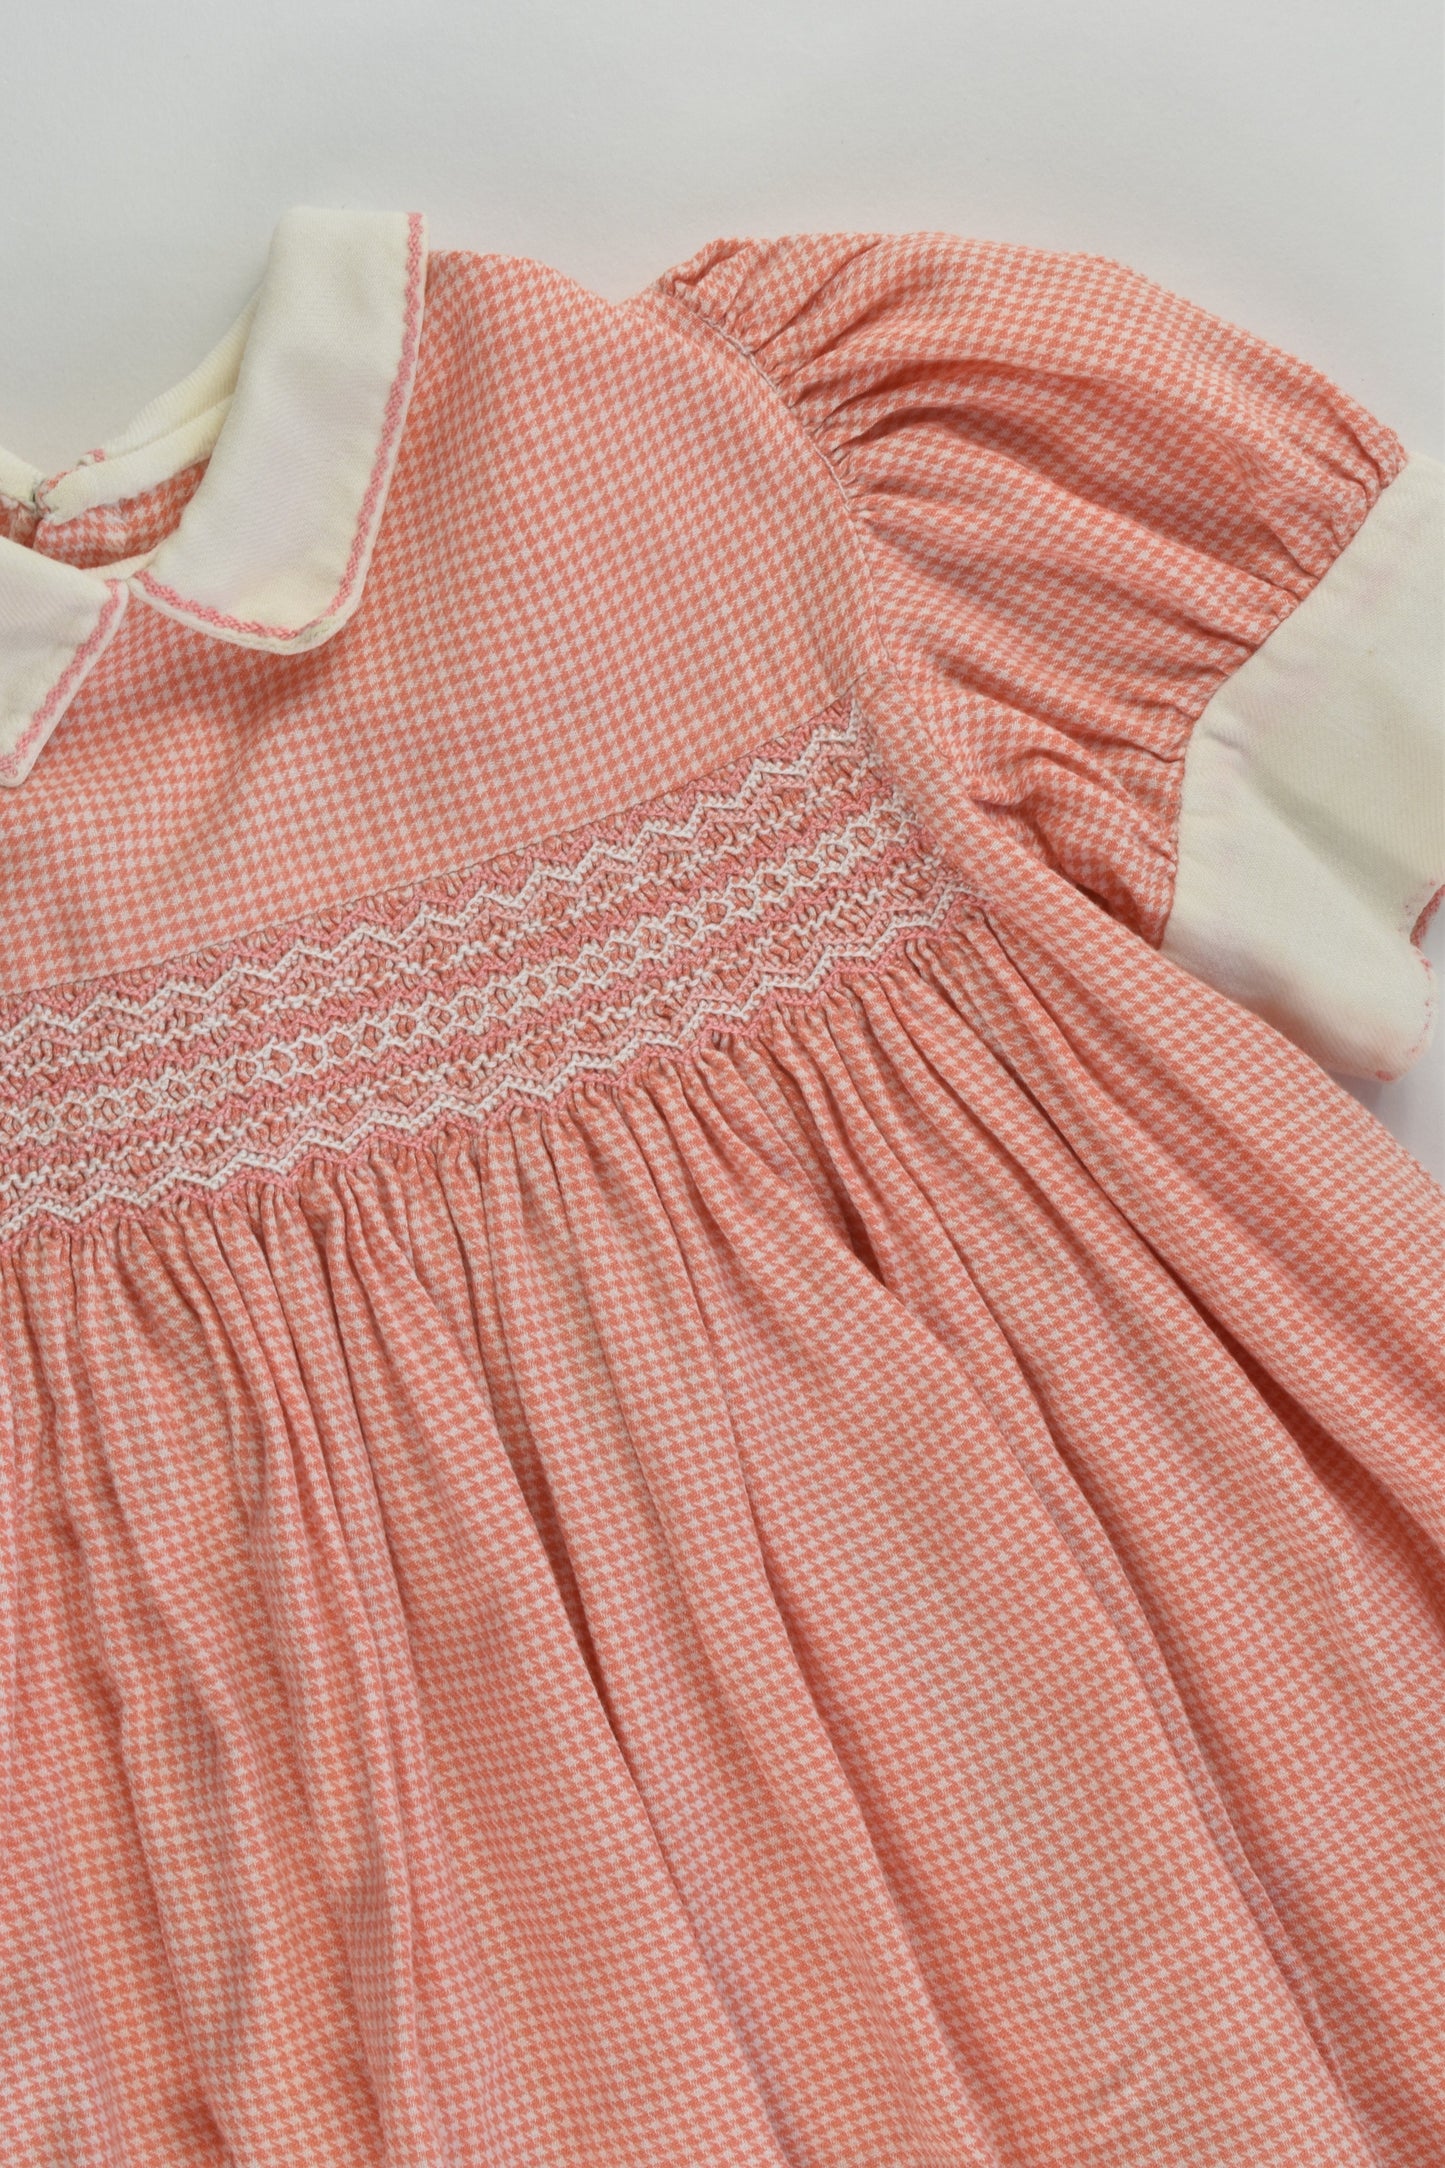 Handmade Size approx 1-2 Vintage Smocked Dress